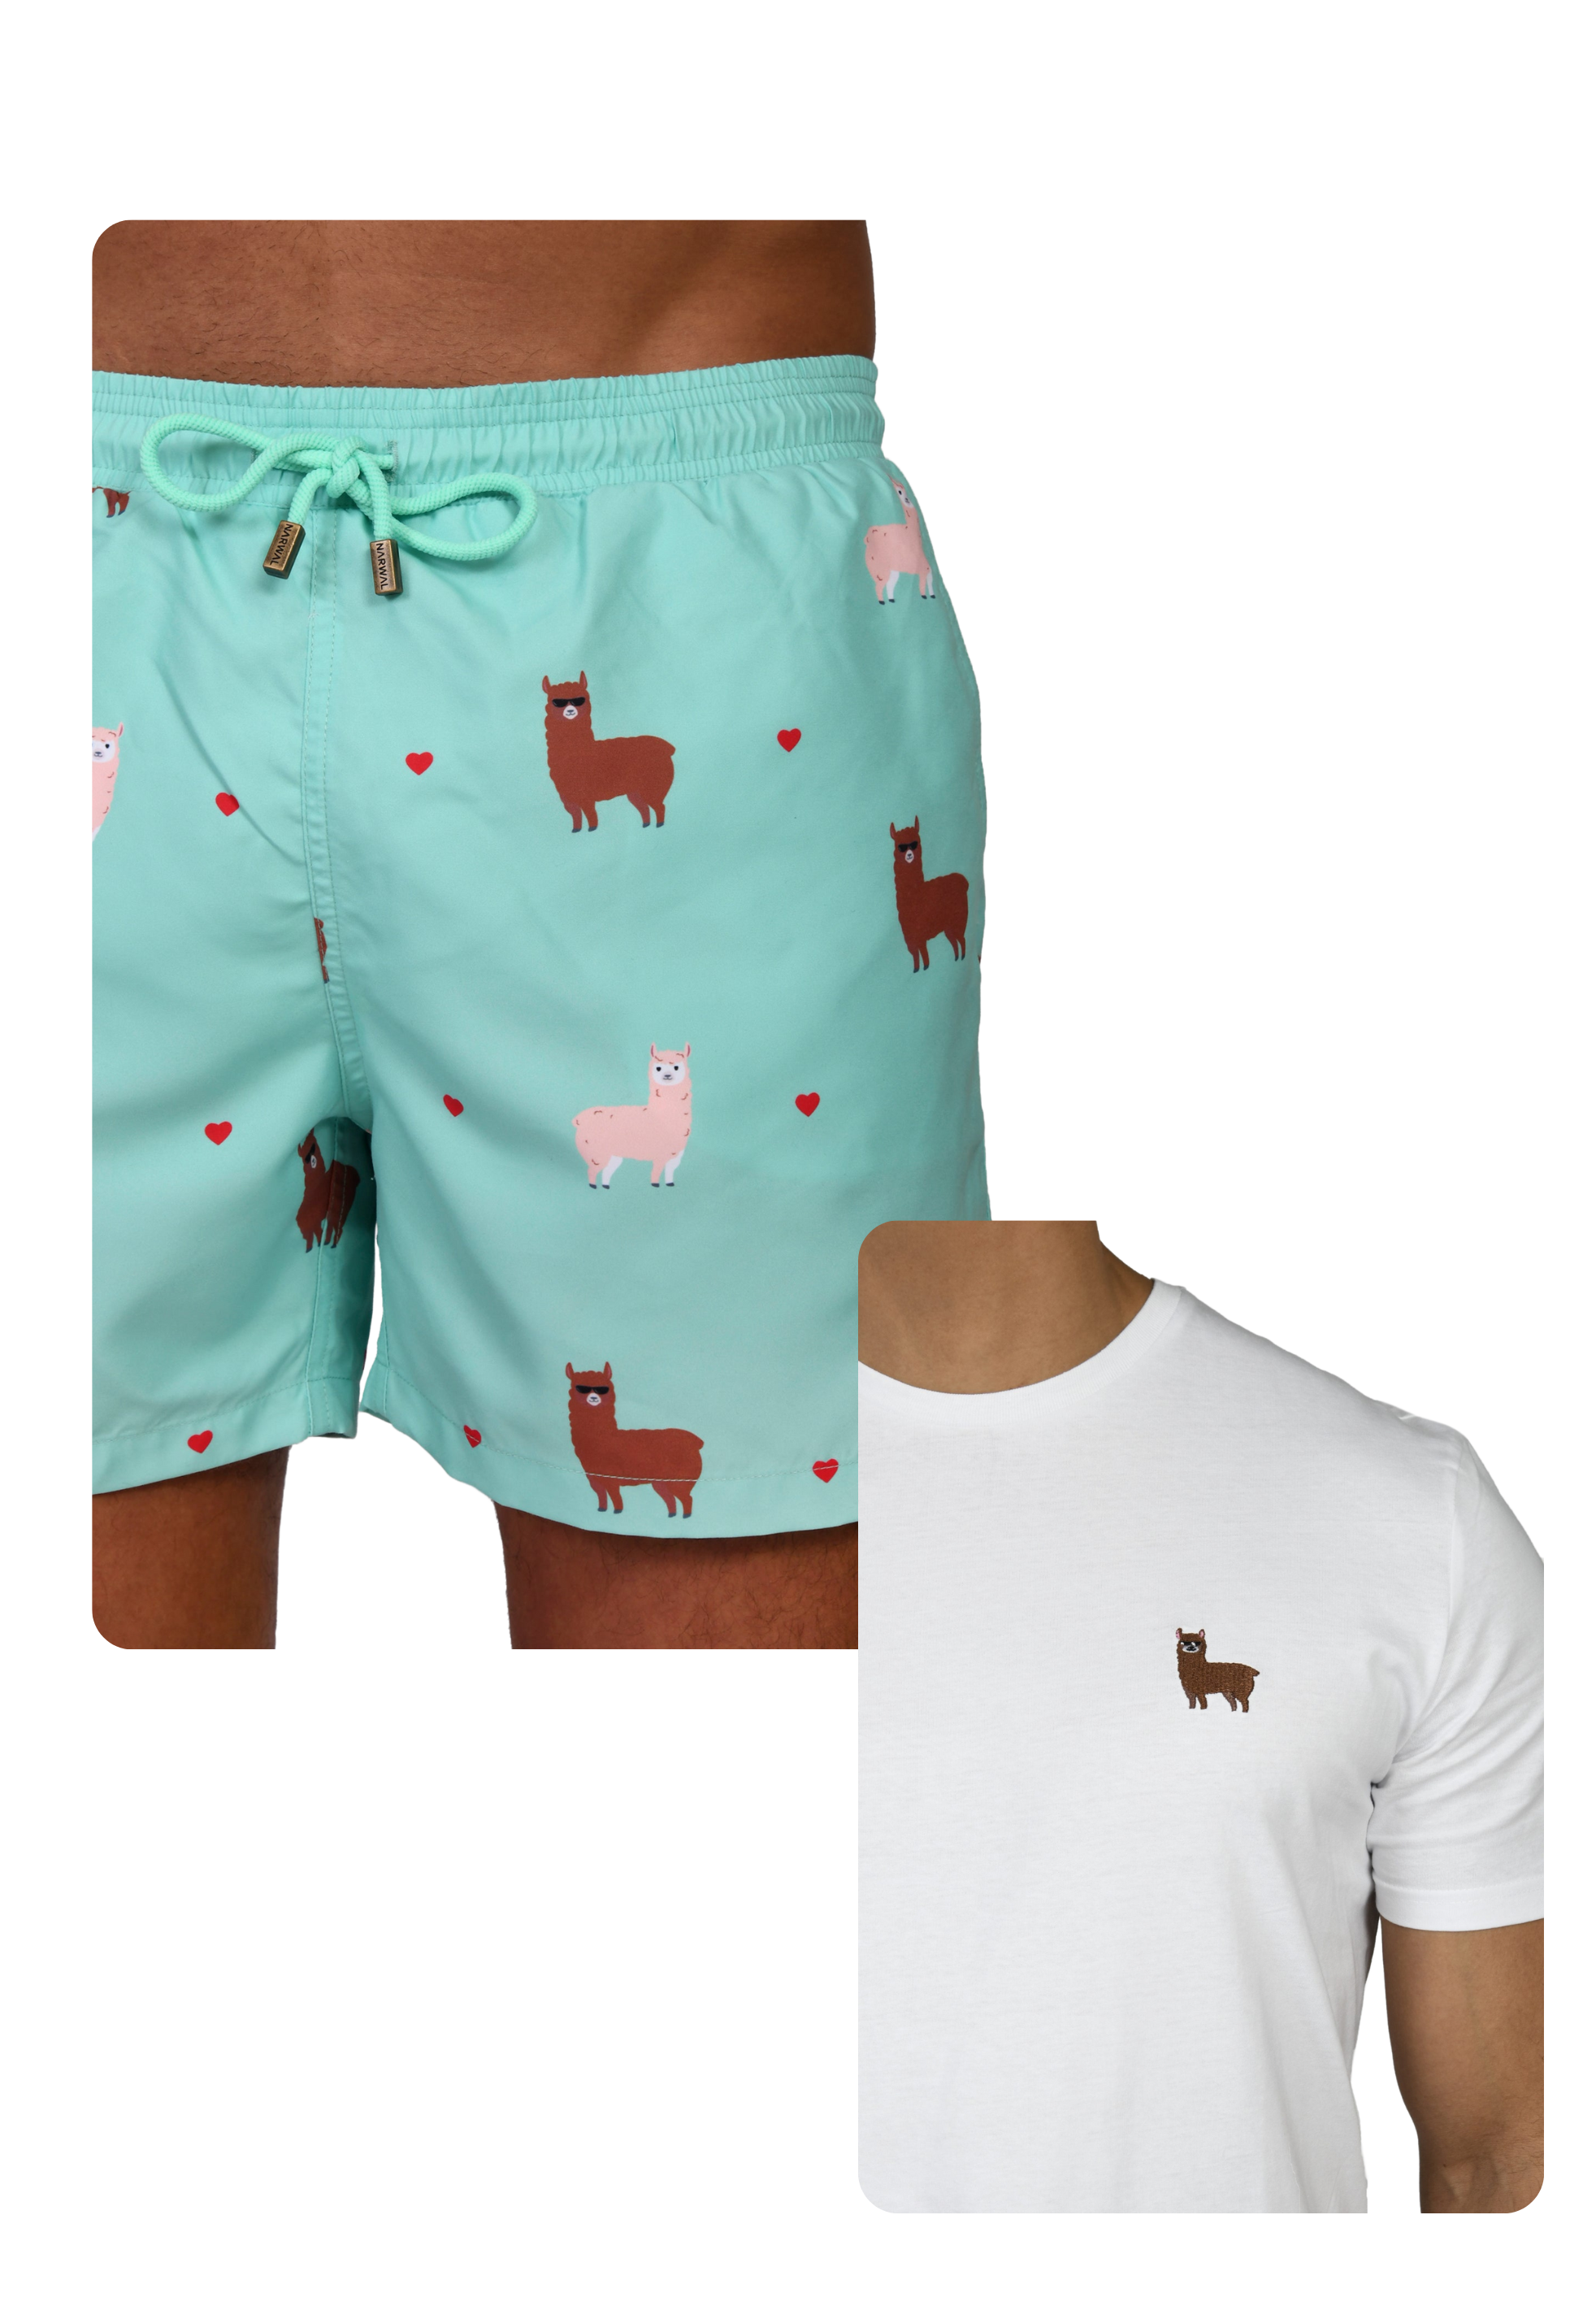 Alpaca Swim Trunks and T-shirt Bundle